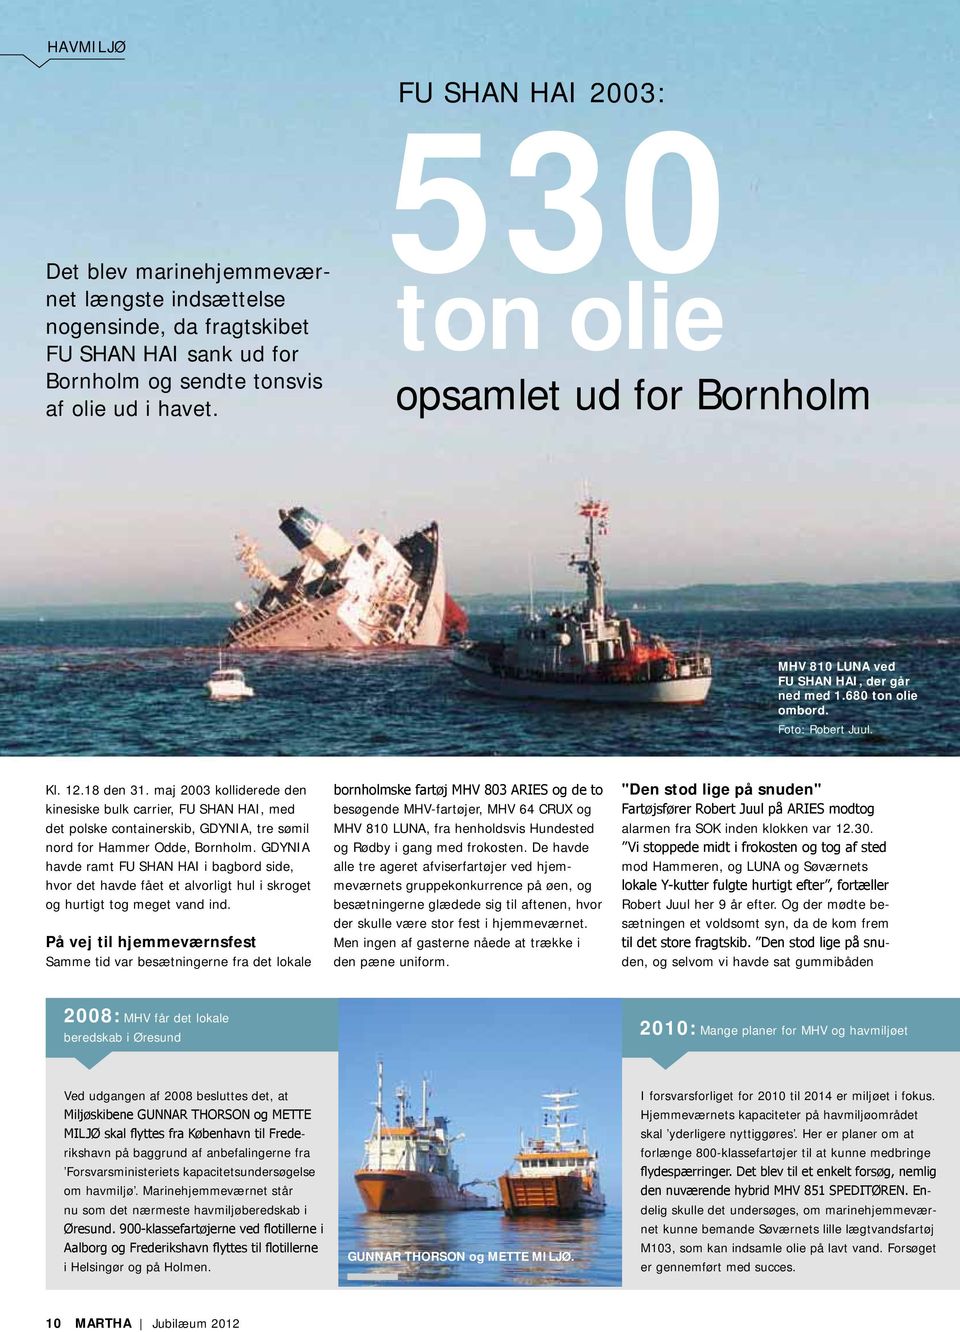 maj 2003 kolliderede den kinesiske bulk carrier, FU SHAN HAI, med det polske containerskib, GDYNIA, tre sømil nord for Hammer Odde, Bornholm.